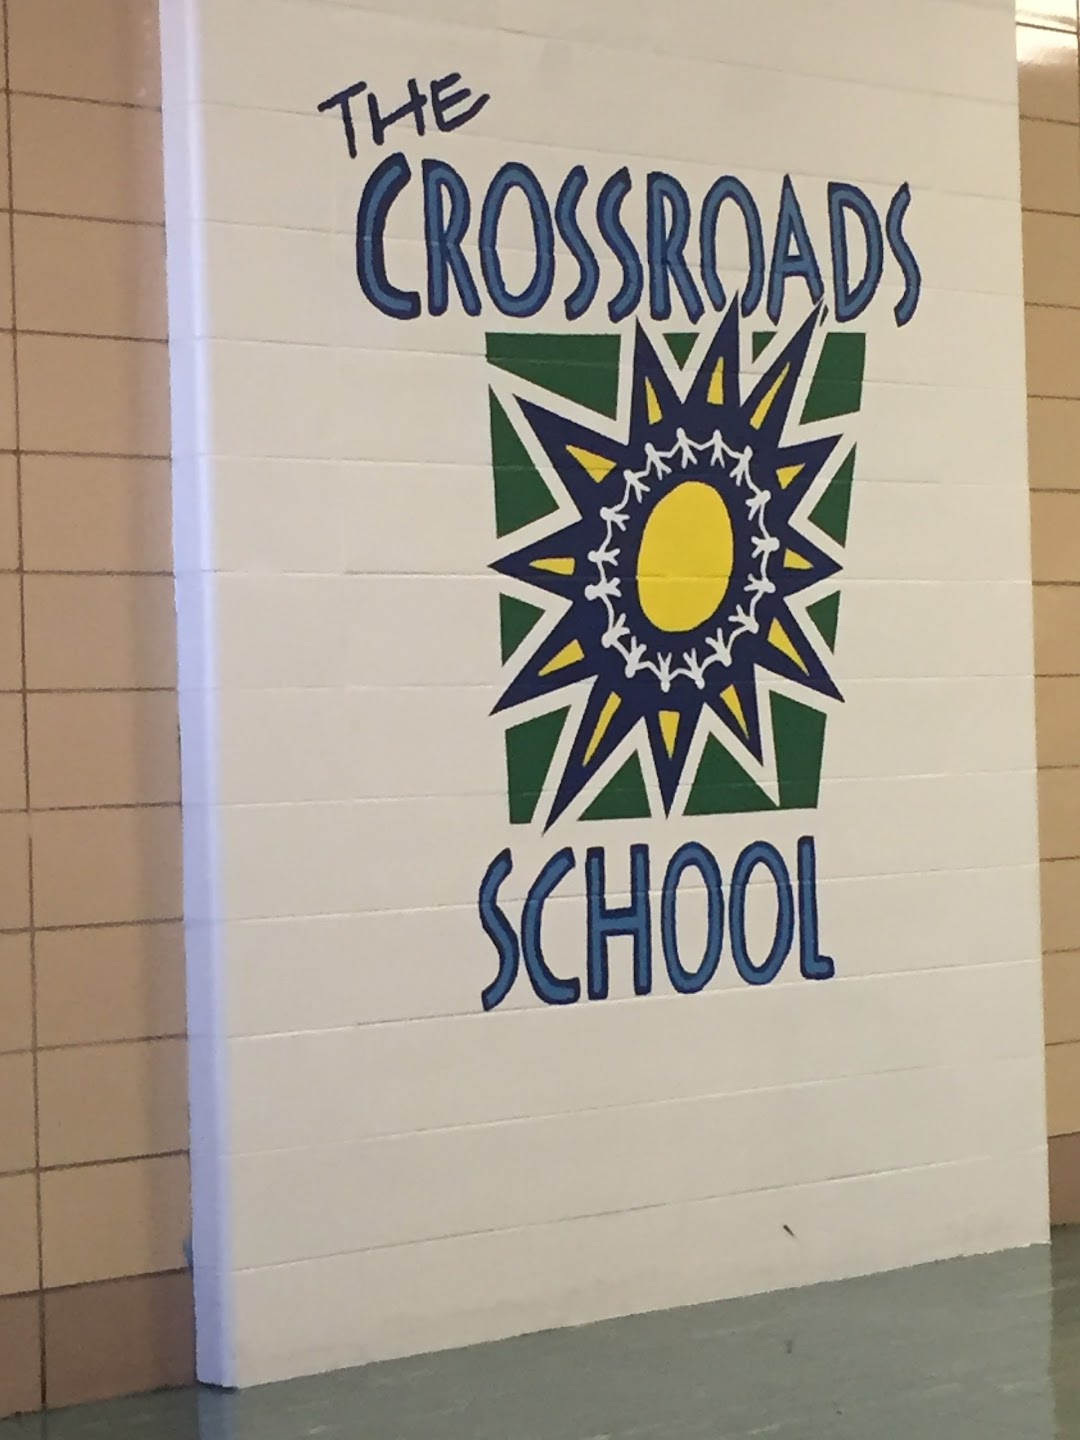 Crossroads School